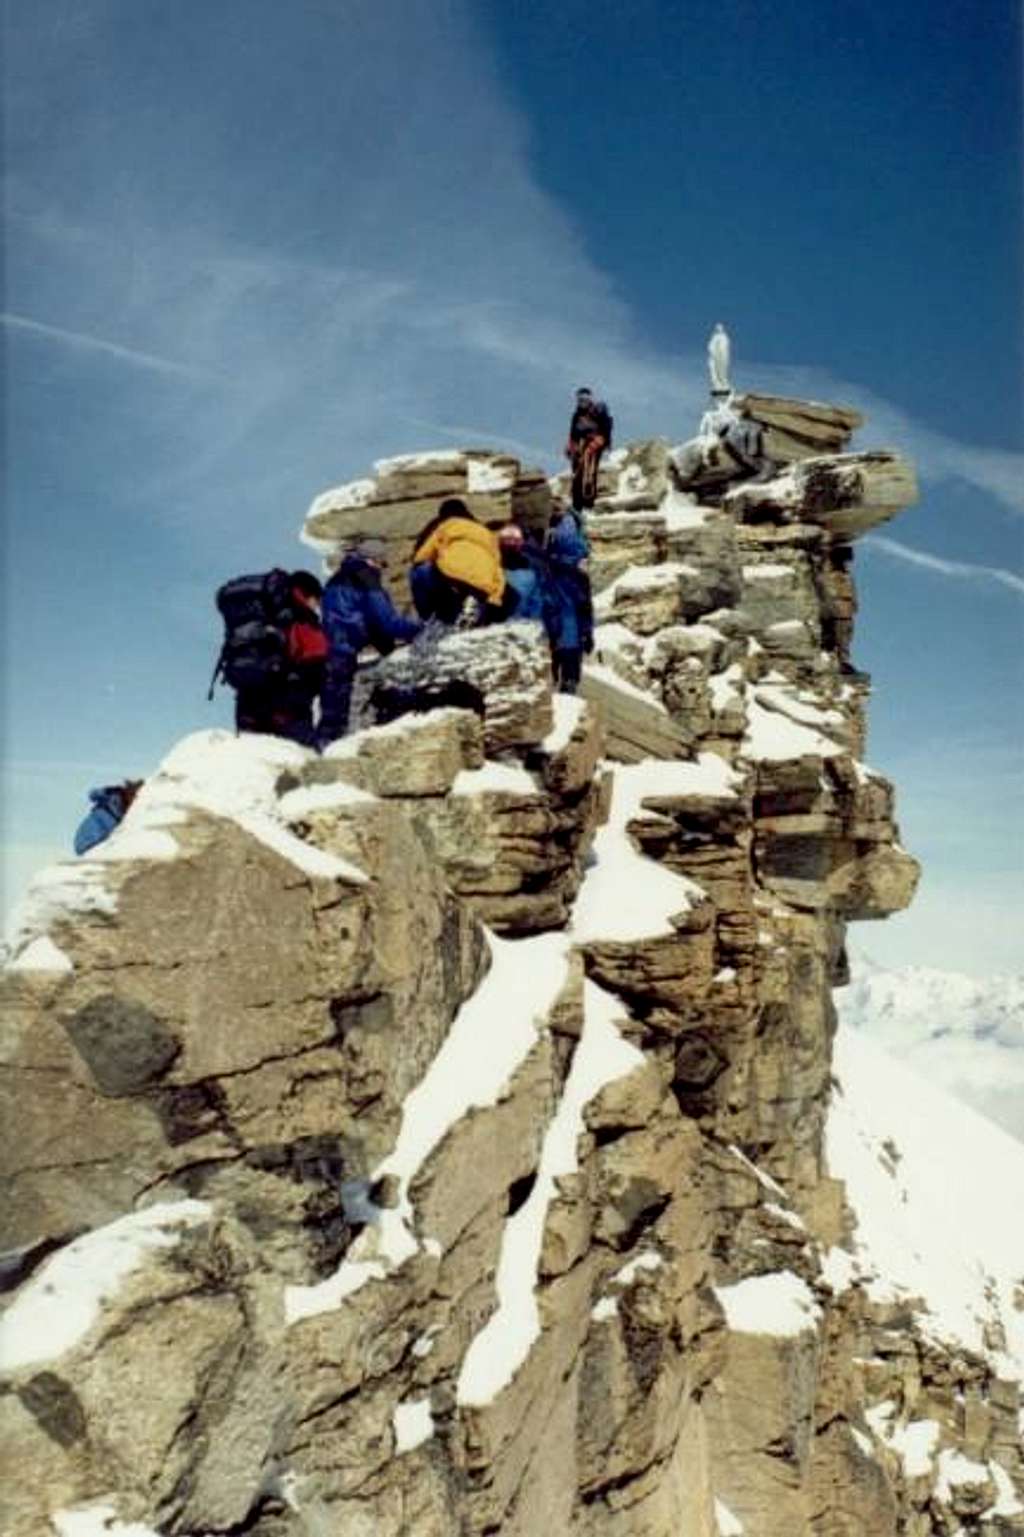 The summit of Gran Paradiso...